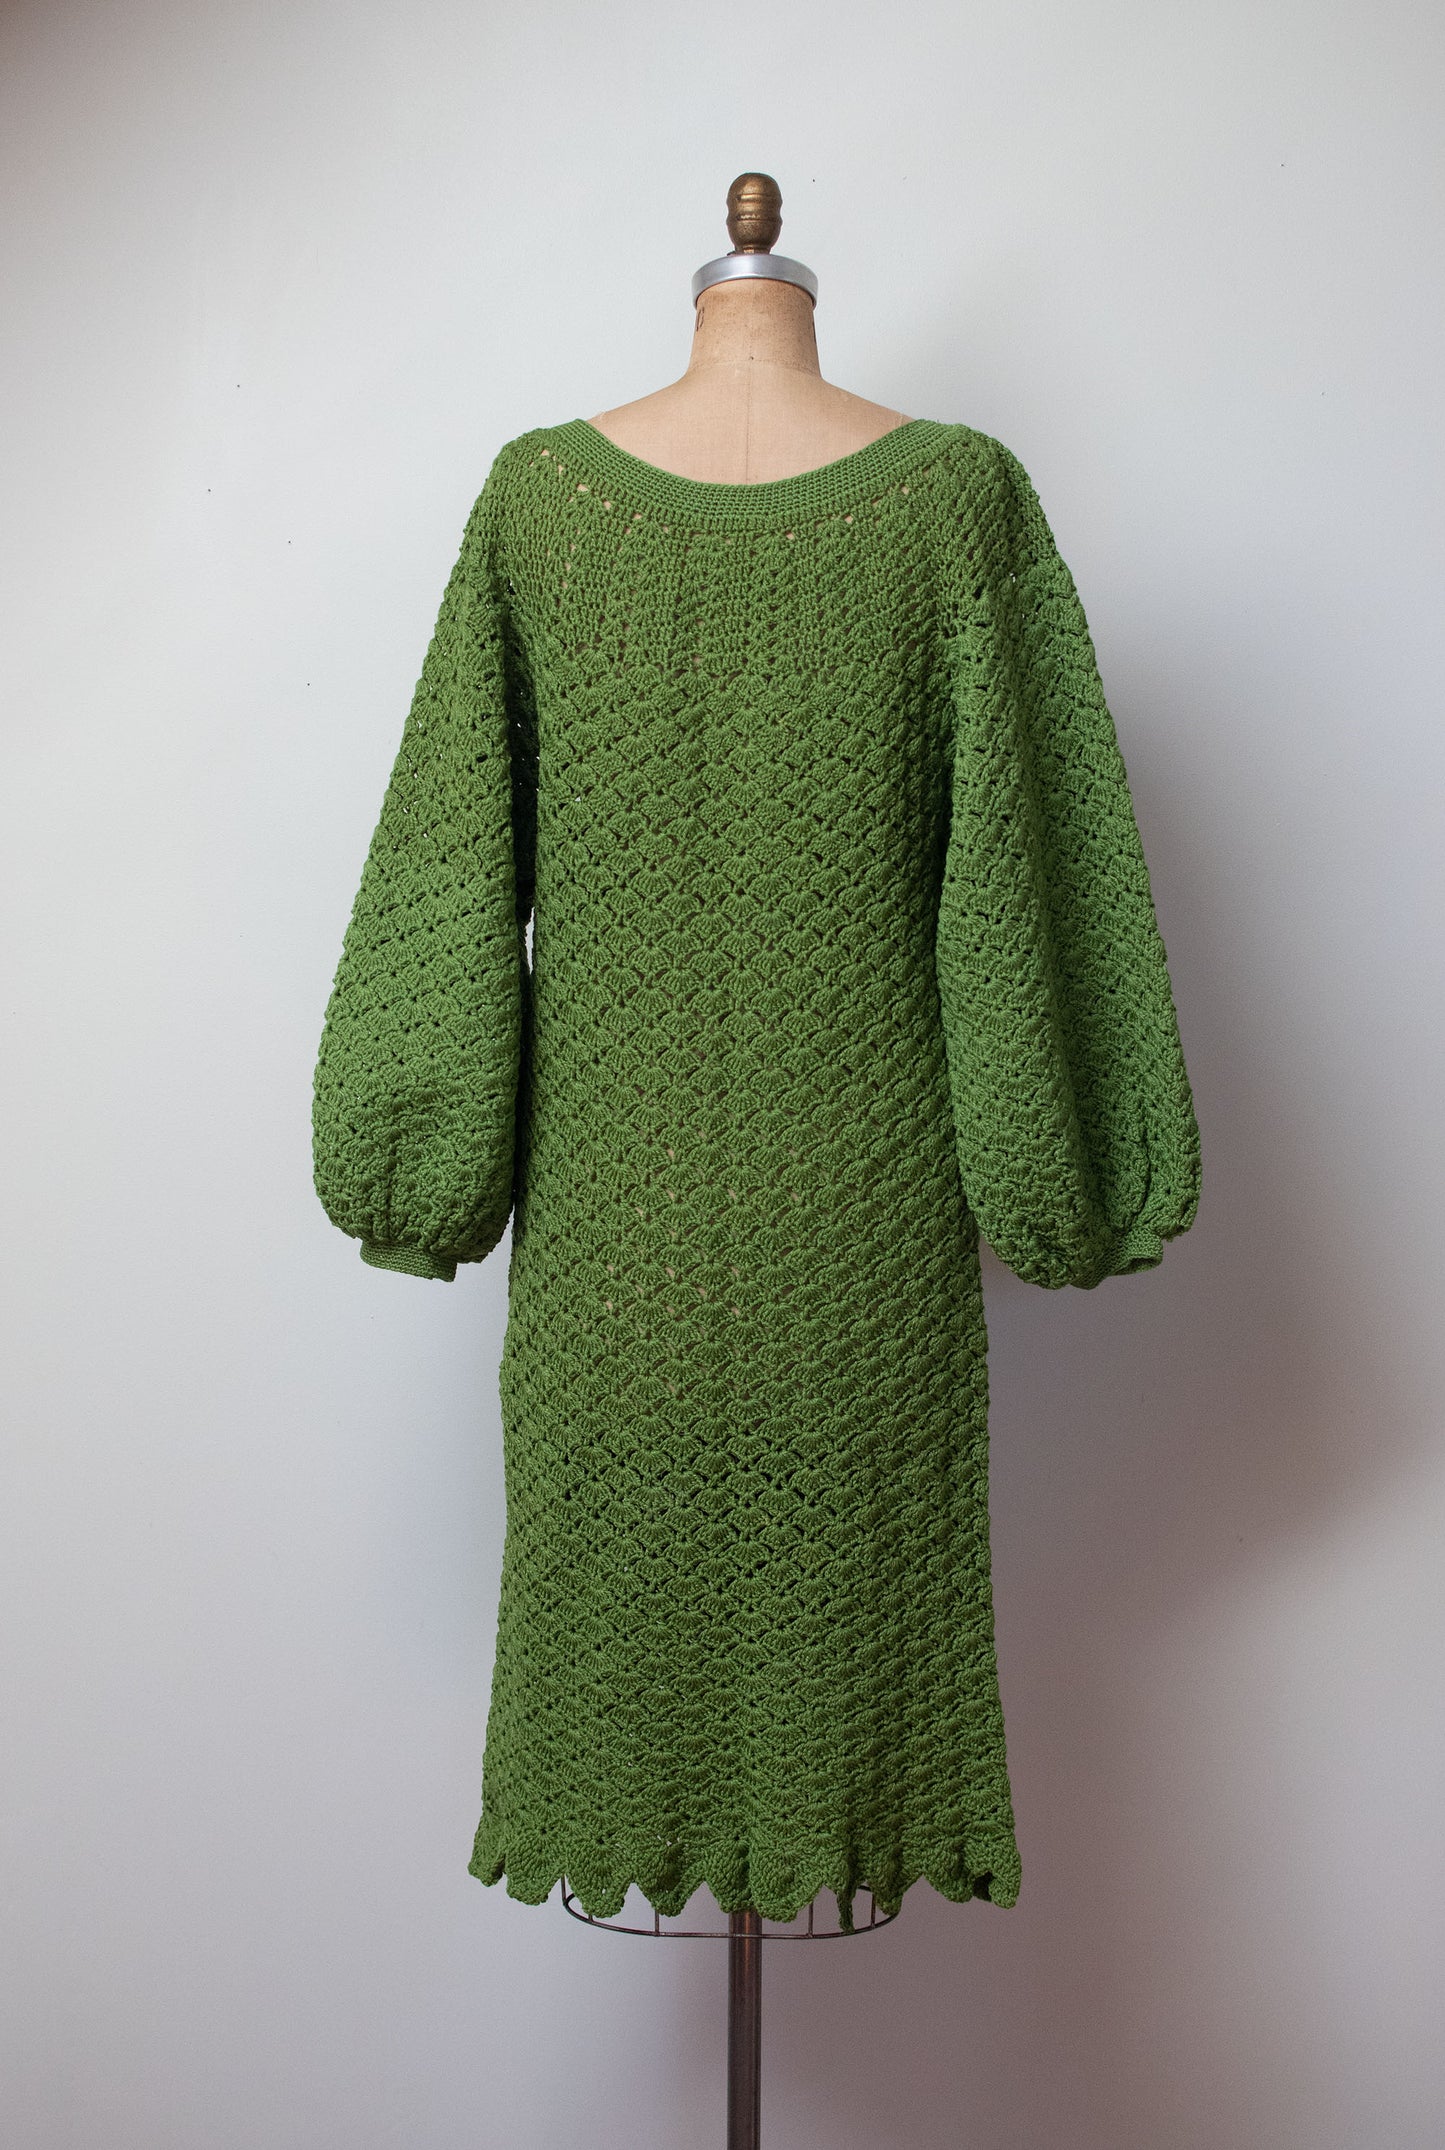 1970s Spring Green Crochet Dress